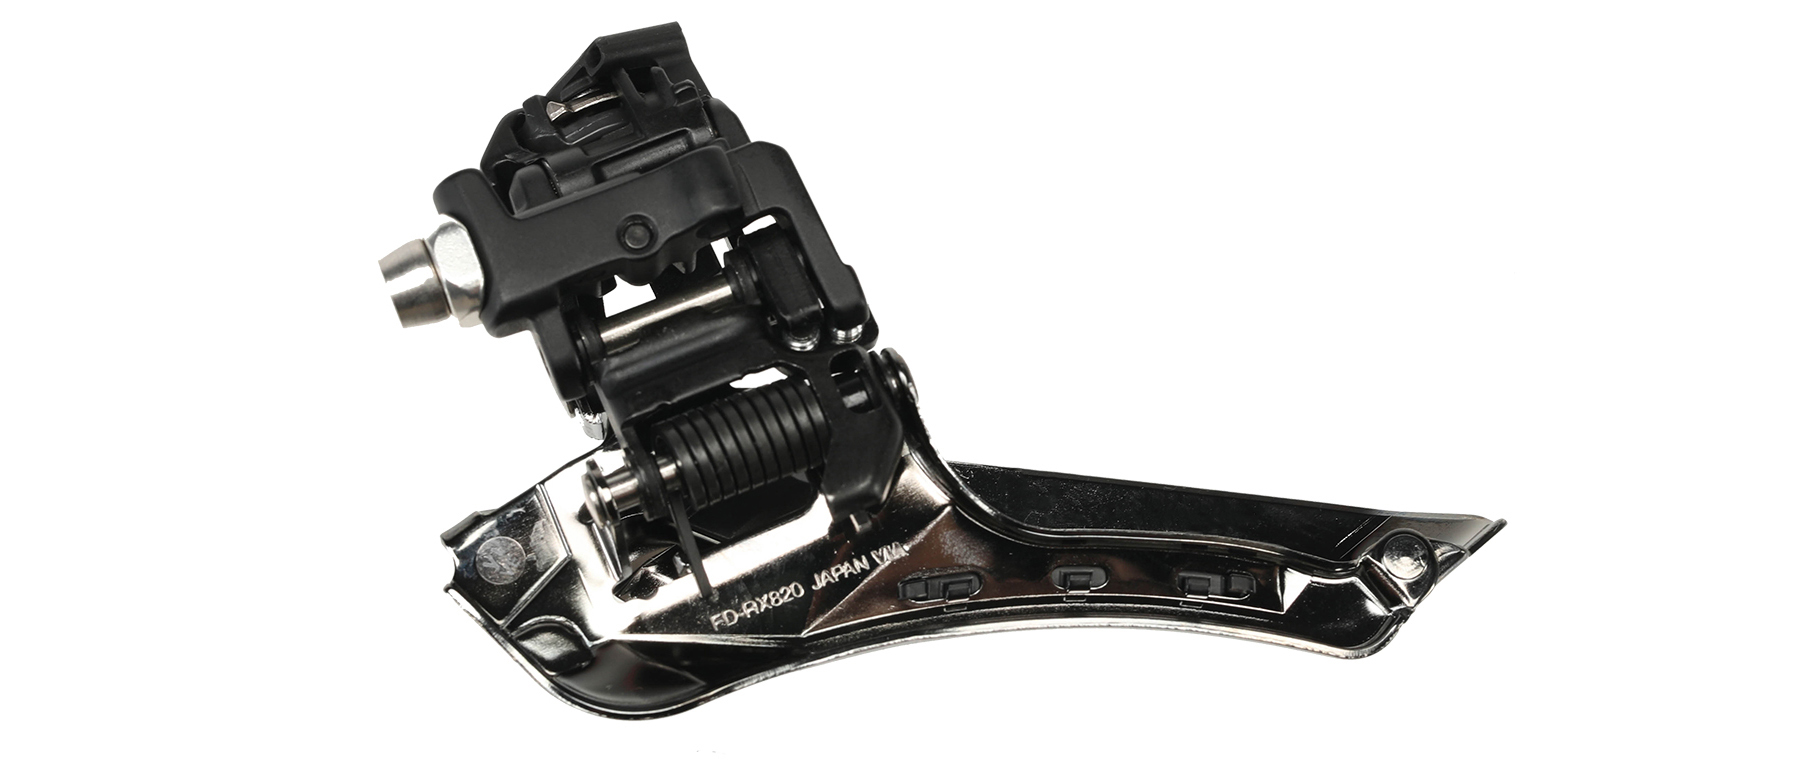 Shimano GRX-820 Mechanical 2x 12-Speed Kit